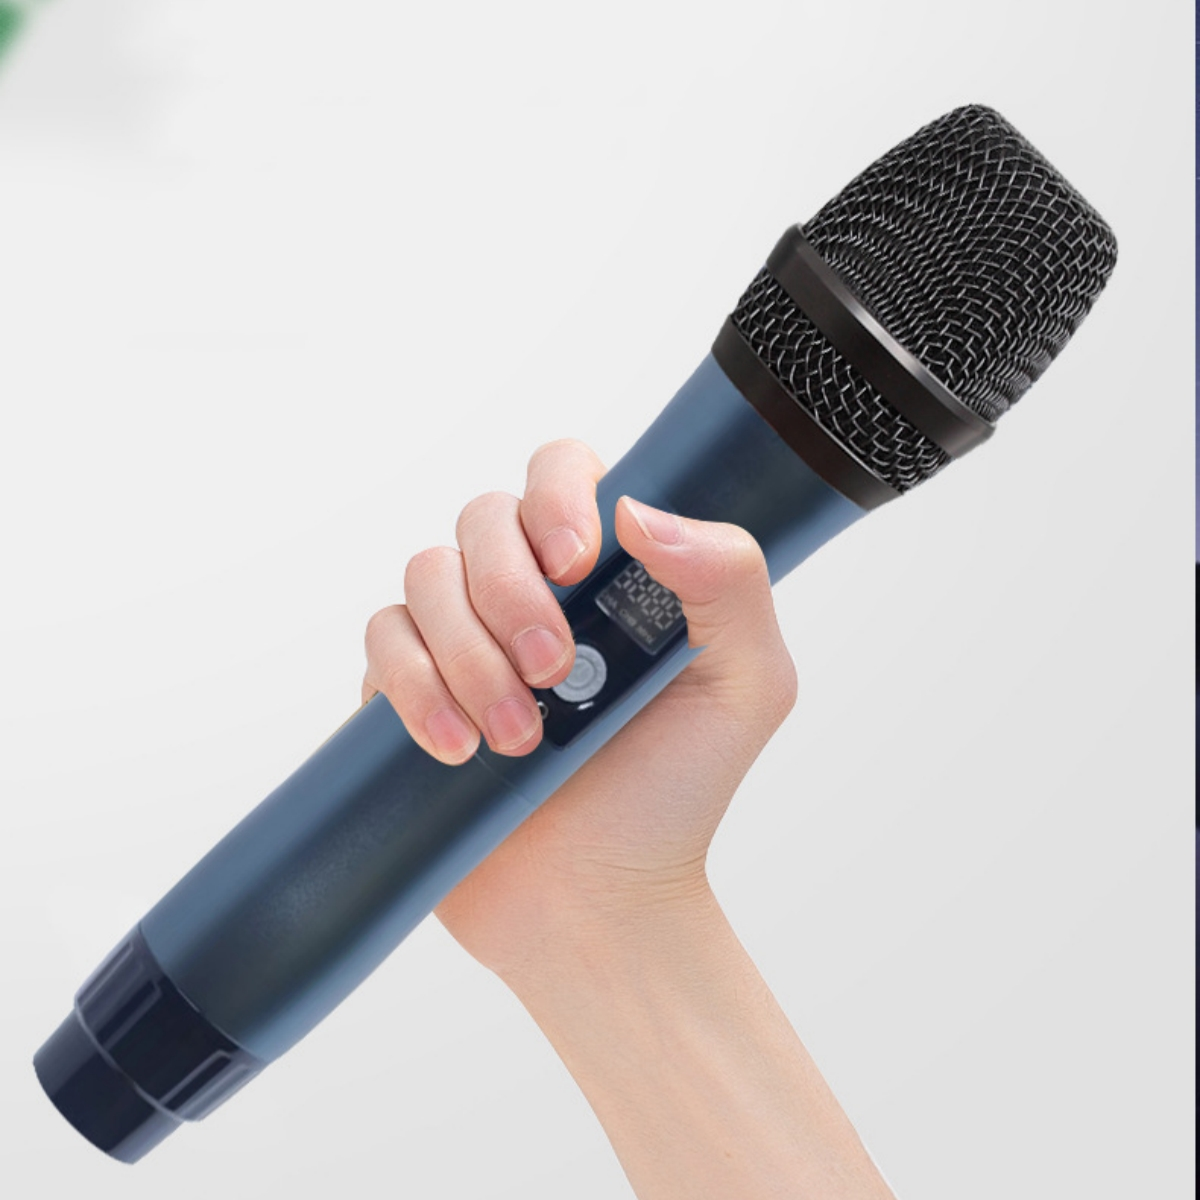 Mikrofone, Hals Portable Bluetooth-Lautsprecher Subwoofer Wearable SHAOKE Wireless Wall Echo Schwarz